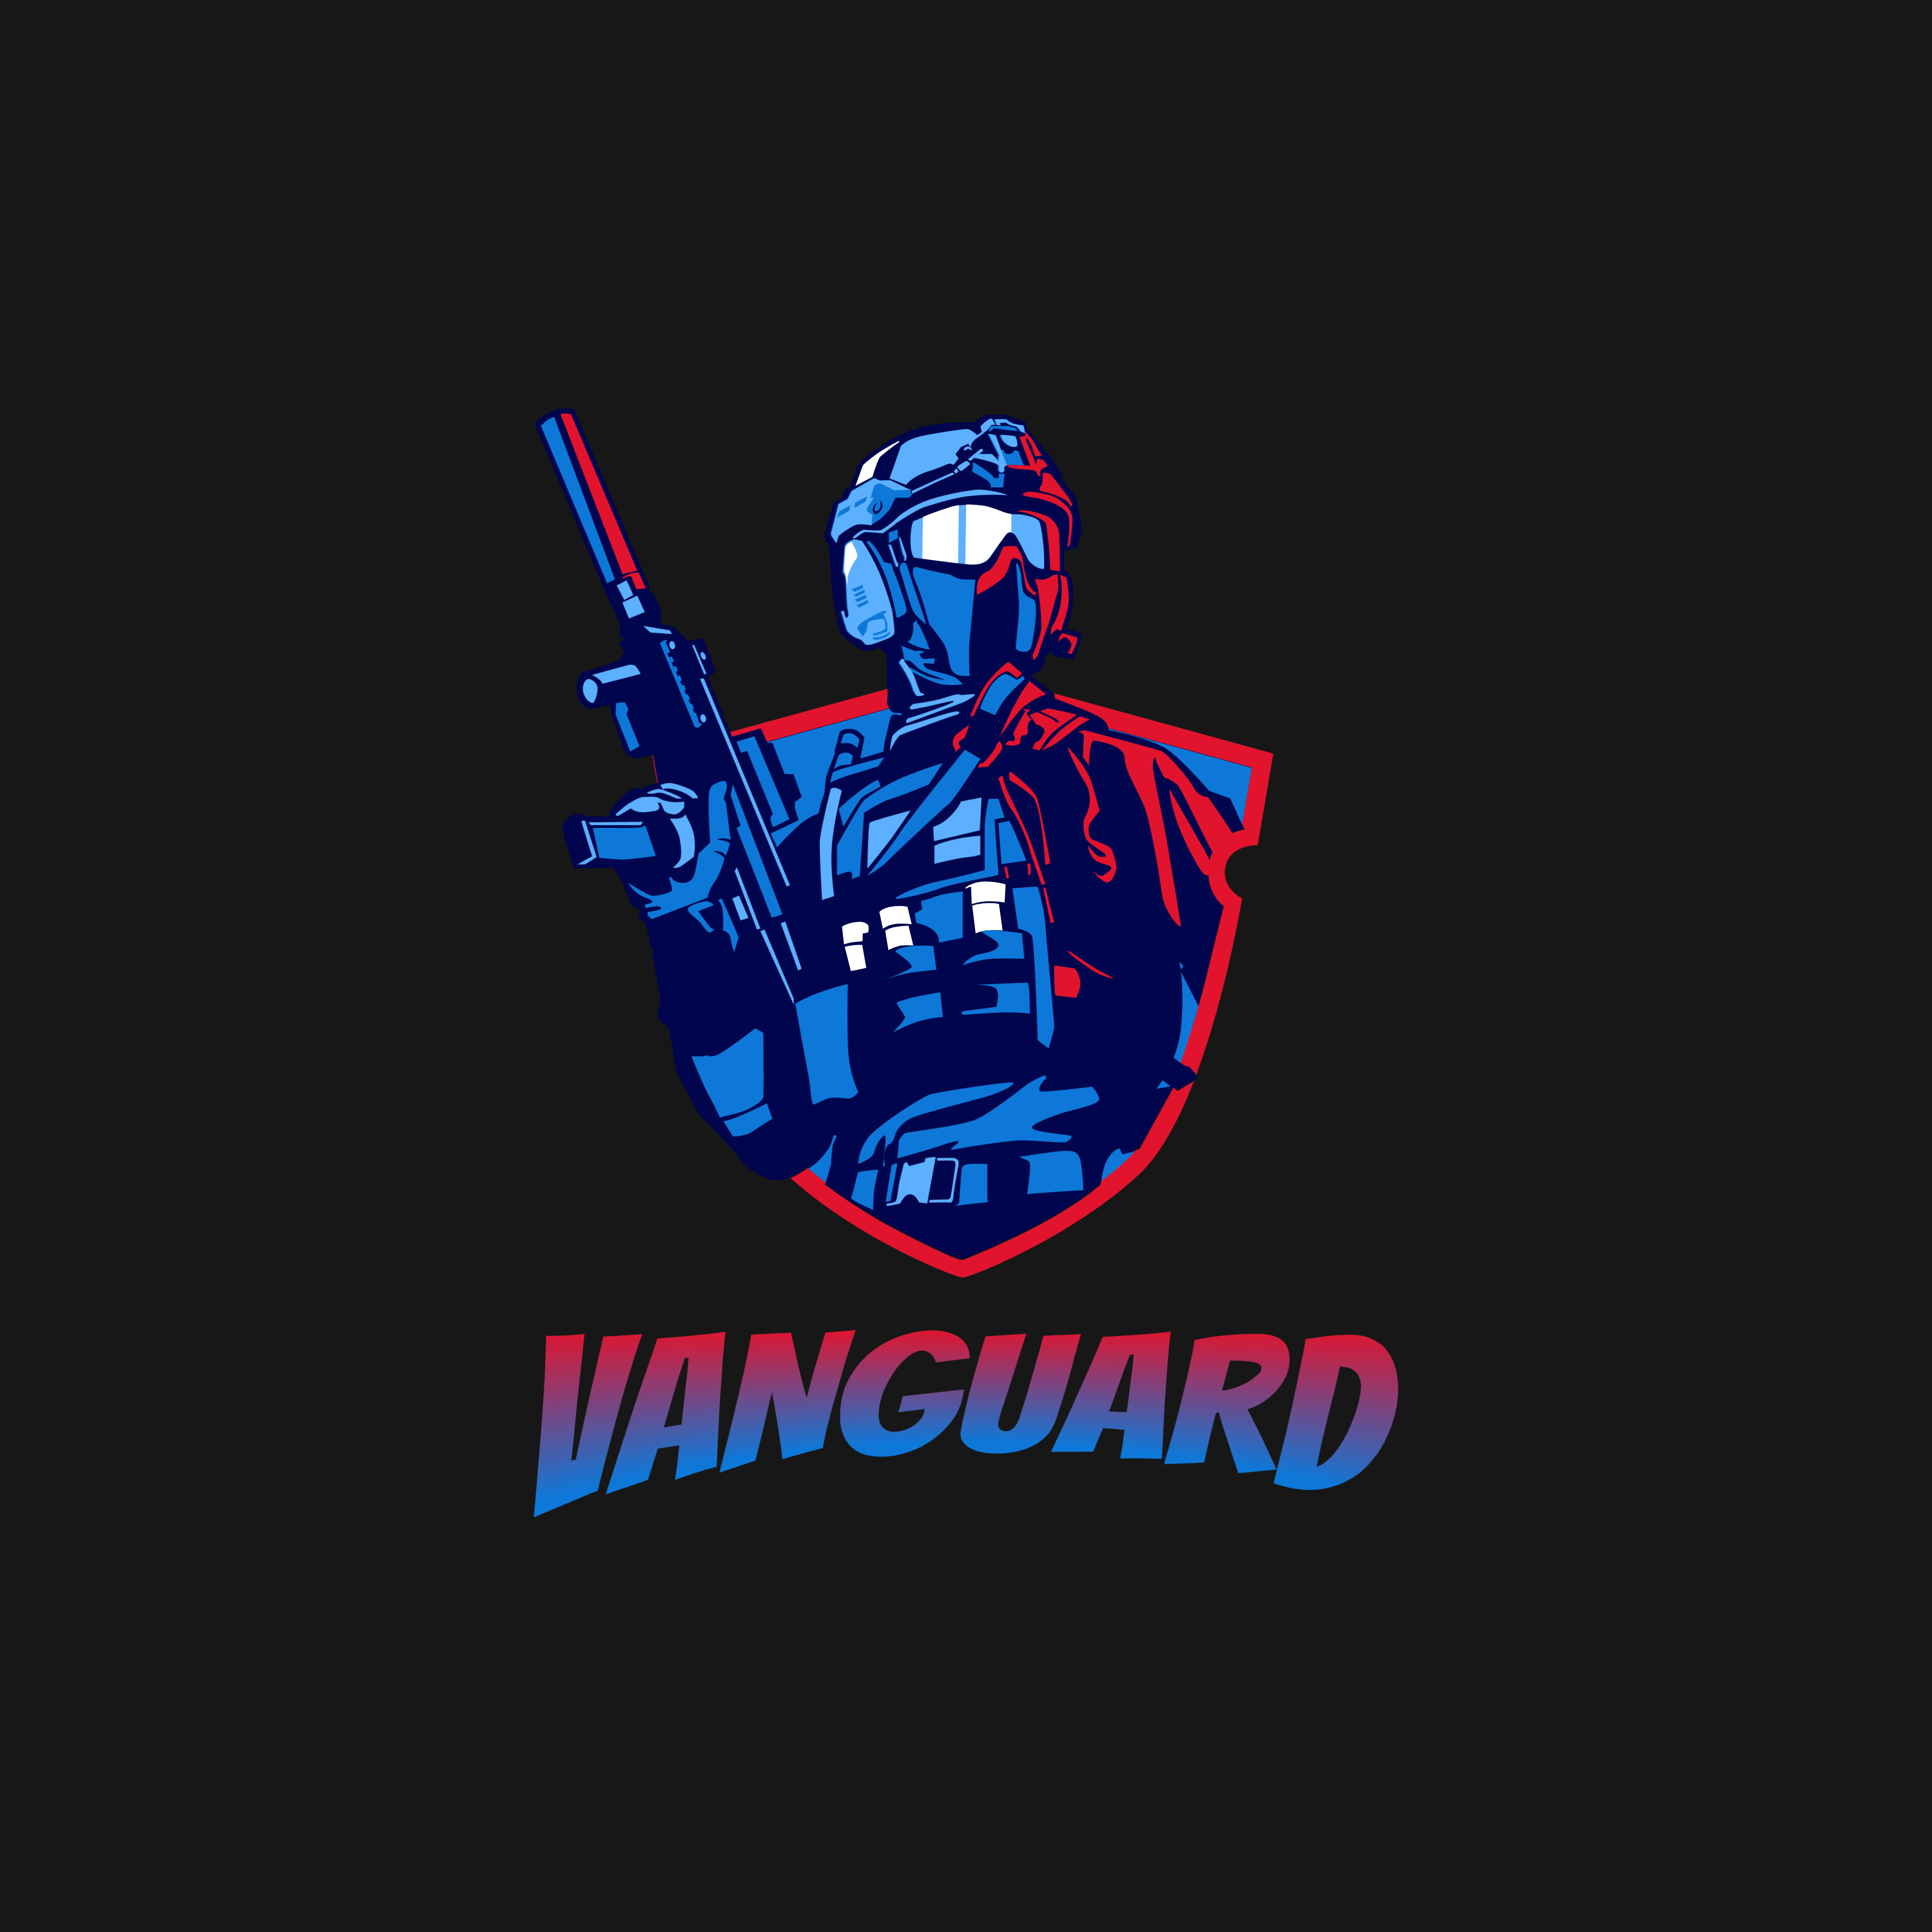 Vanguardshooter